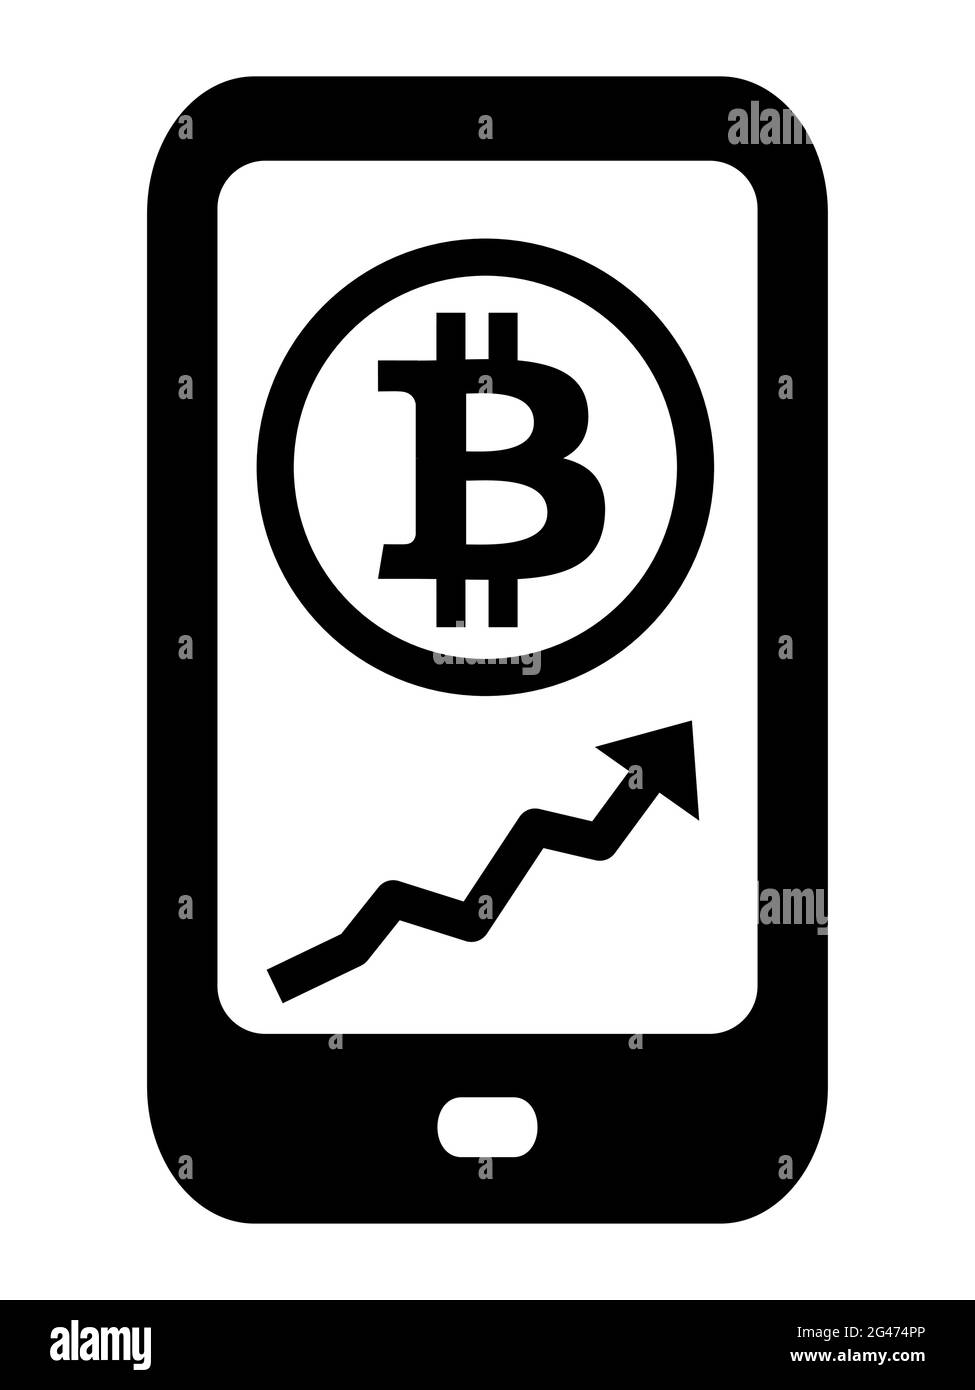 Bitcoin broker market app on smartphone device symbol vector illustration icon Stock Vector